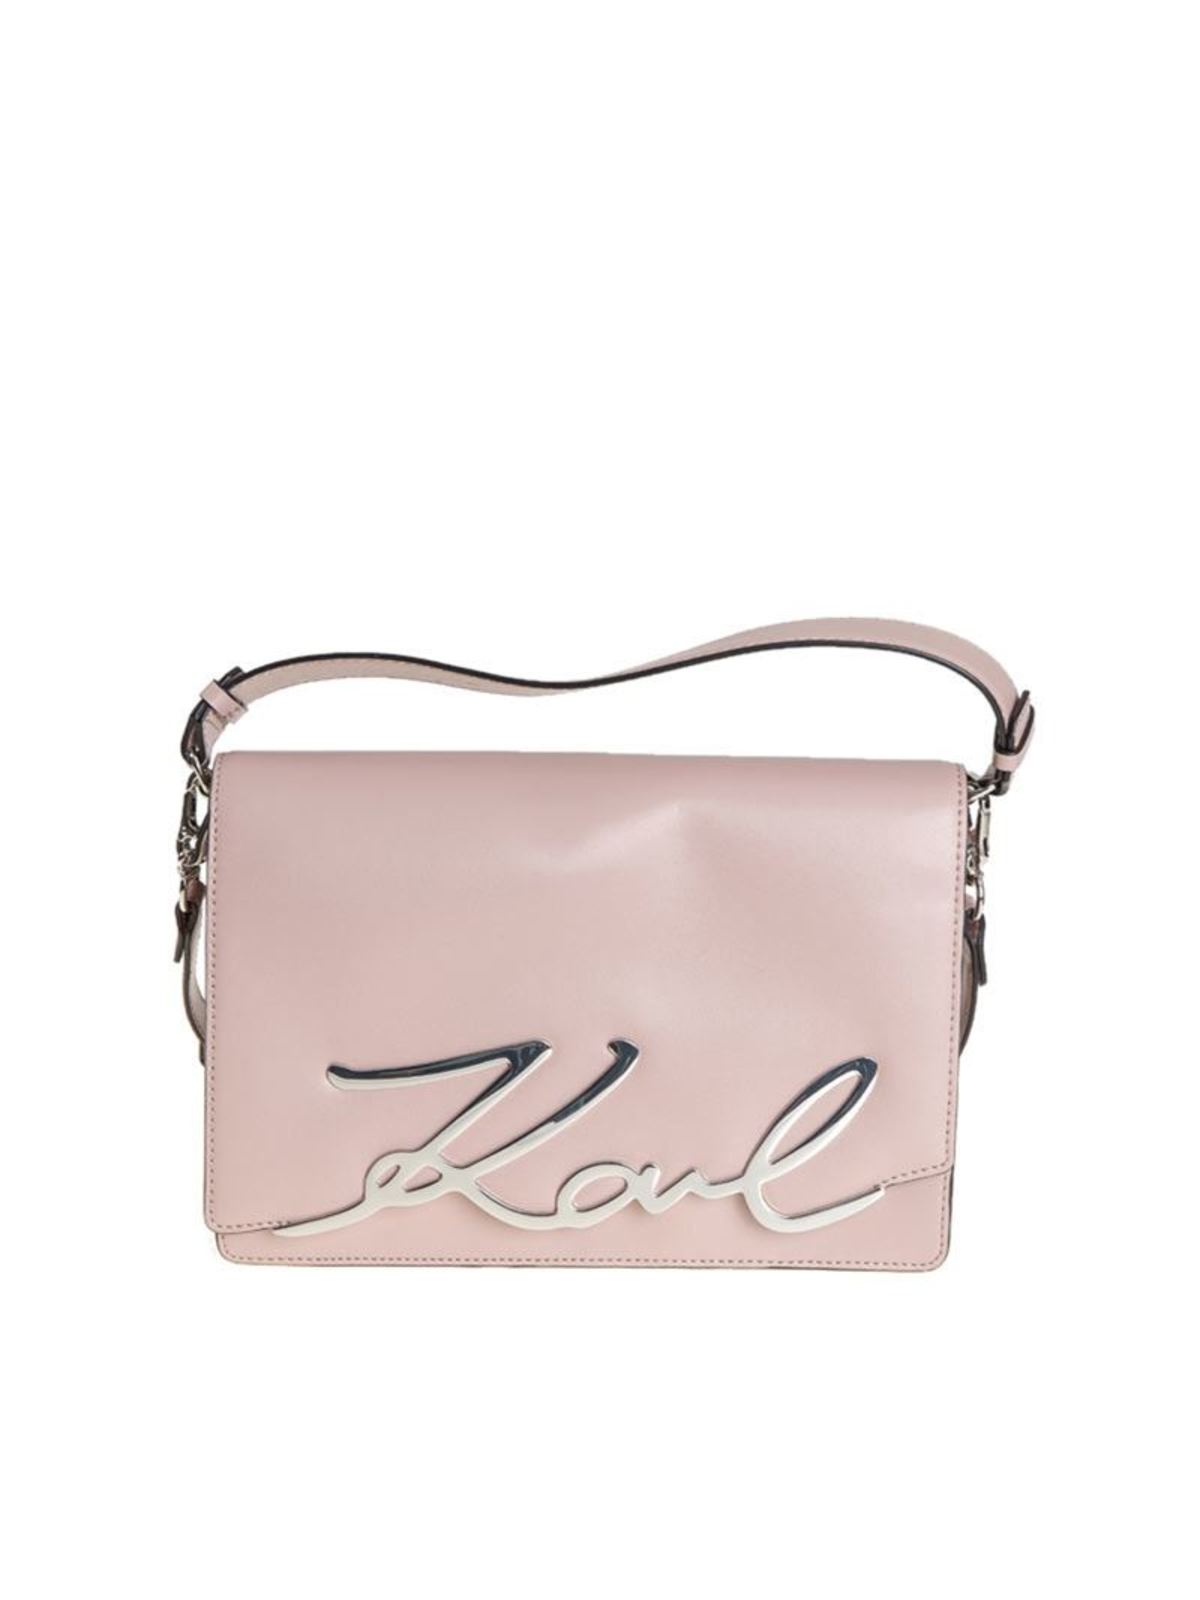 Karl Lagerfeld Leather Bag In Rosado